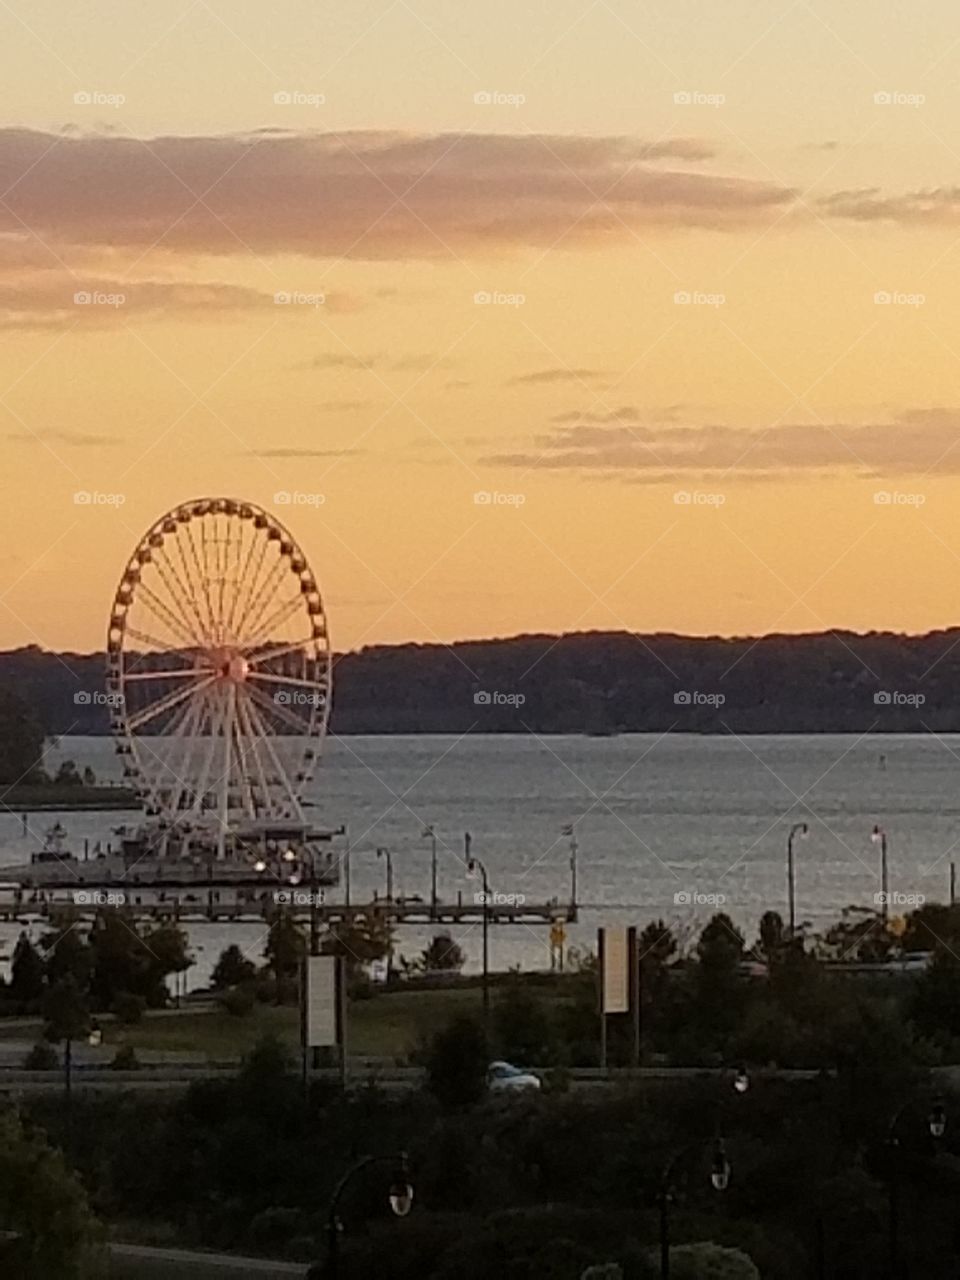 Ferris Wheel Sunset